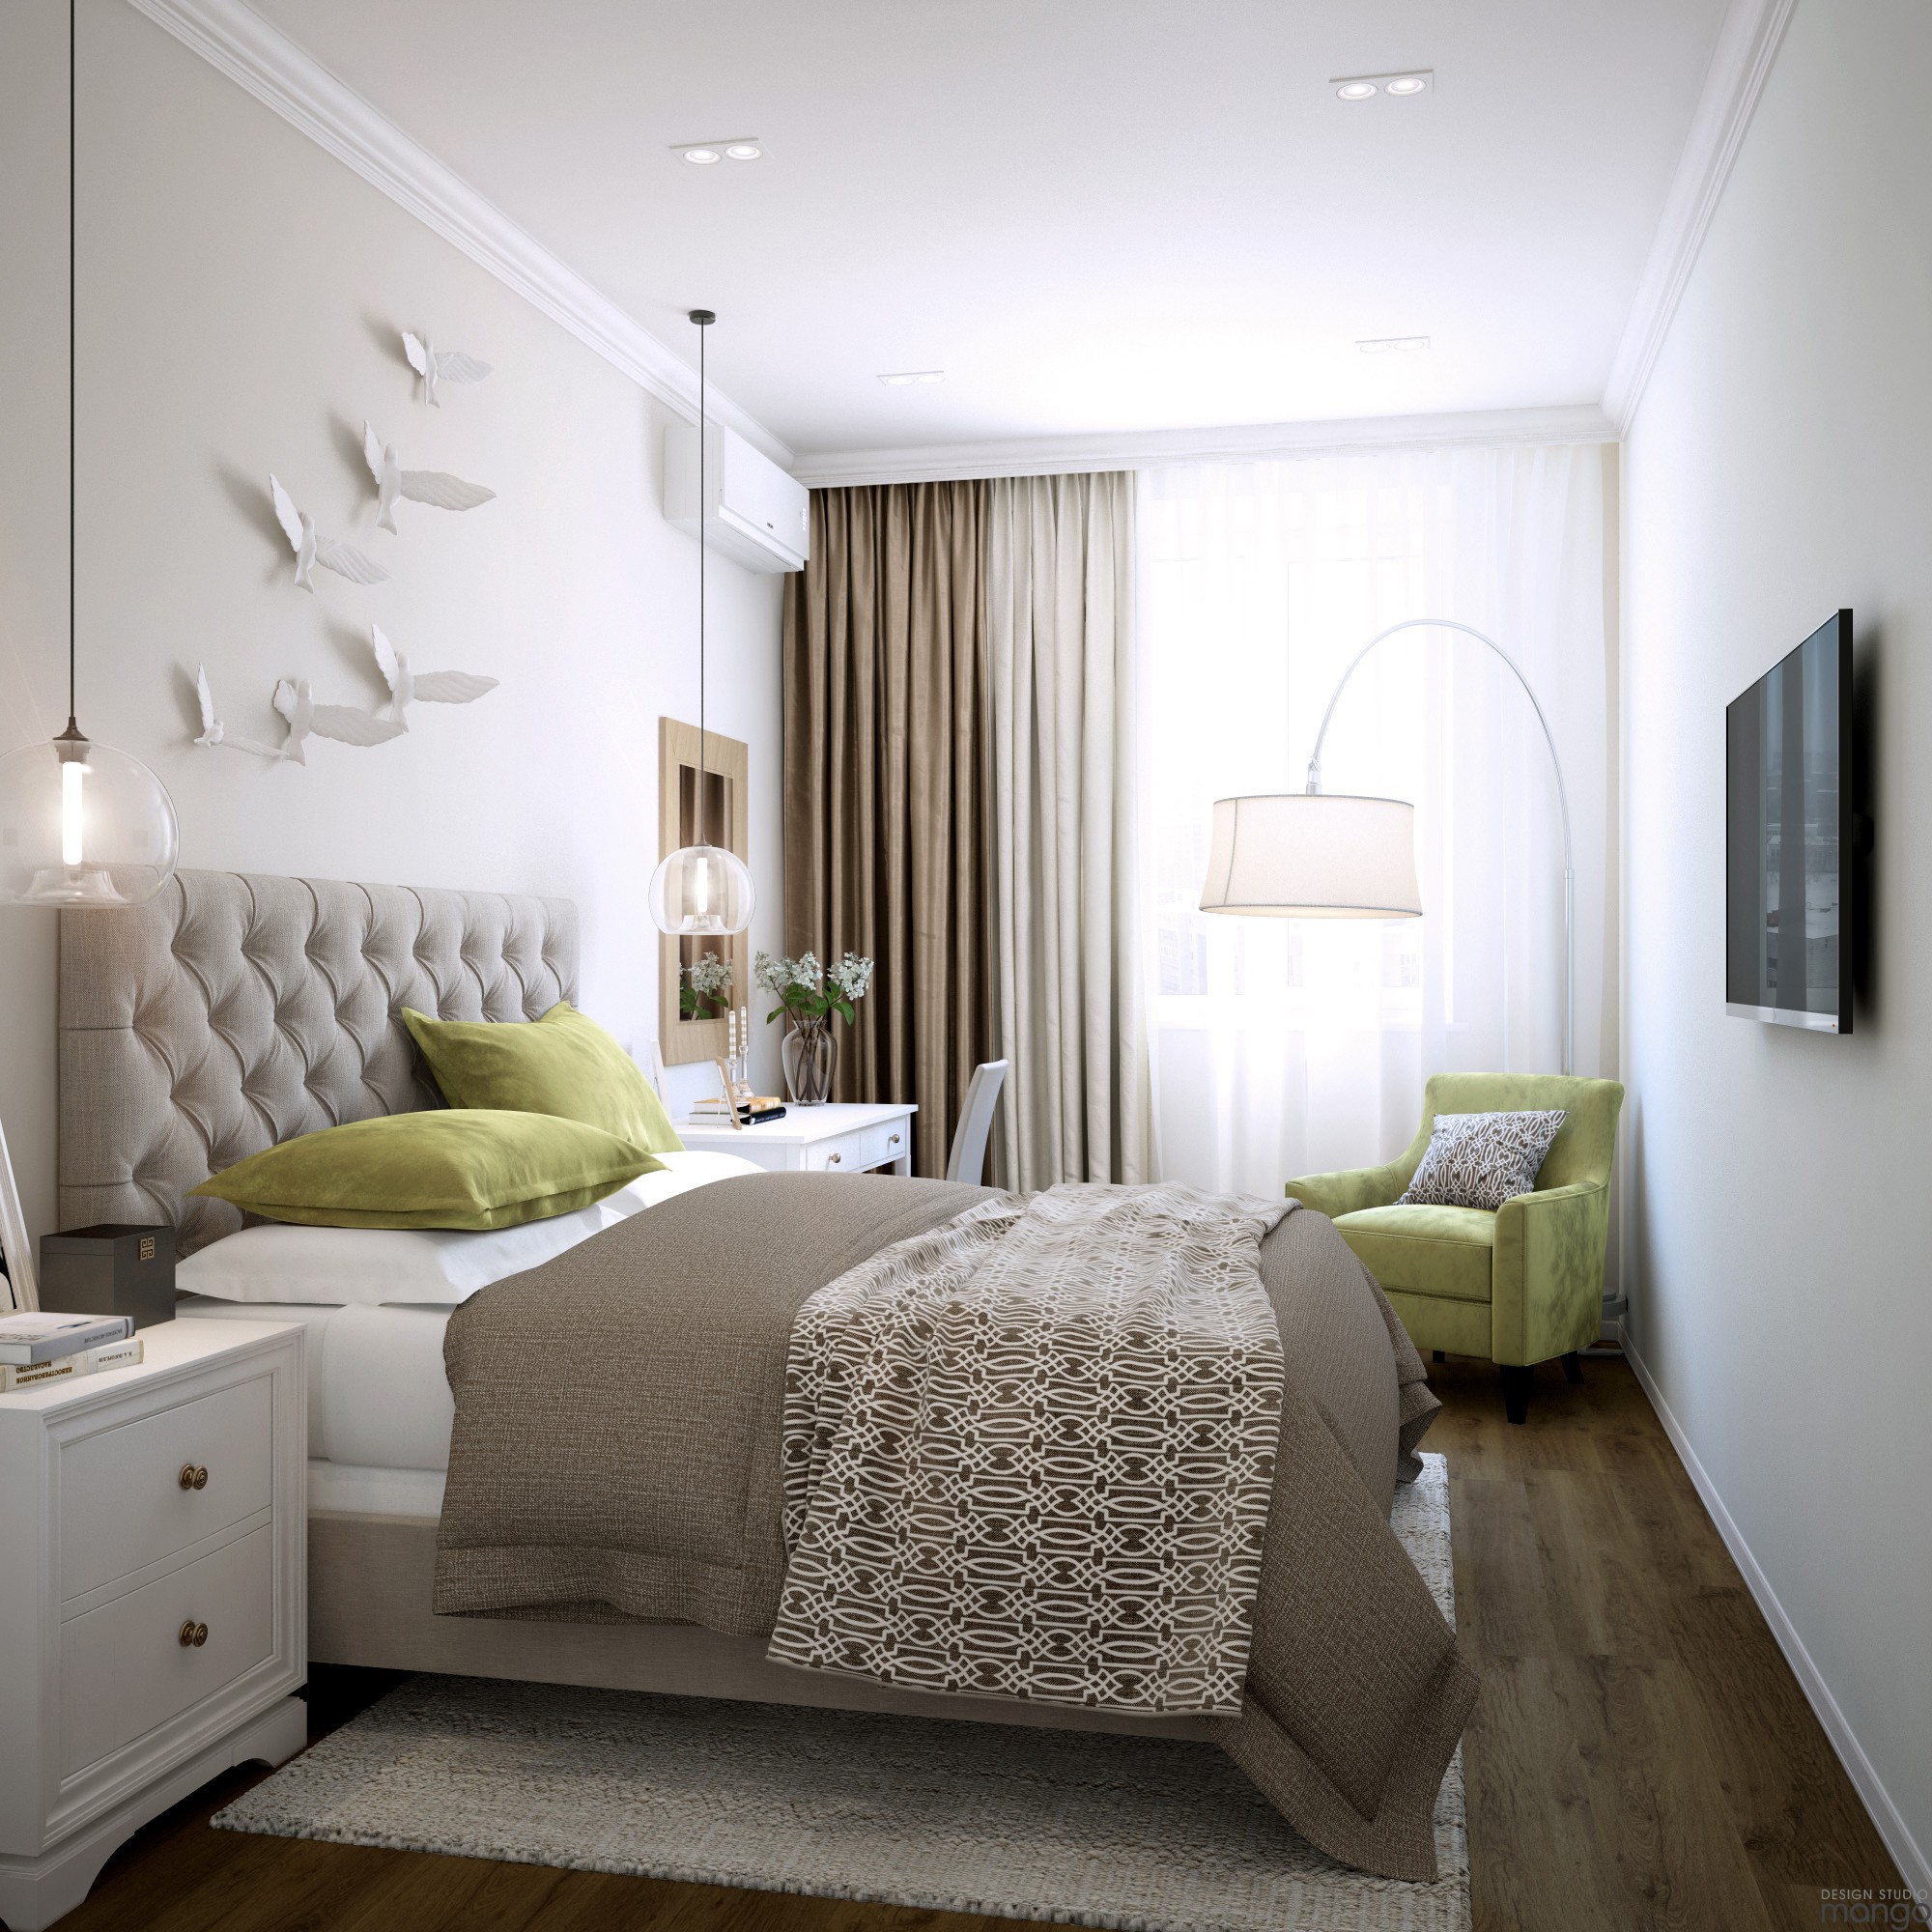 modern bedroom backsplash "width =" 2000 "height =" 2000 "srcset =" https://mileray.com/wp-content/uploads/2020/05/1588508352_521_Types-of-Minimalist-Bedroom-Decorating-Ideas-Which-Looks-So-Attractive.jpg 2000w, https: // mileray.com/wp-content/uploads/2016/10/Design-Studio-Mango-8-150x150.jpg 150w, https://mileray.com/wp-content/uploads/2016/10/Design-Studio-Mango -8-300x300.jpg 300w, https://mileray.com/wp-content/uploads/2016/10/Design-Studio-Mango-8-768x768.jpg 768w, https://mileray.com/wp-content /uploads/2016/10/Design-Studio-Mango-8-1024x1024.jpg 1024w, https://mileray.com/wp-content/uploads/2016/10/Design-Studio-Mango-8-696x696.jpg 696w , https://mileray.com/wp-content/uploads/2016/10/Design-Studio-Mango-8-1068x1068.jpg 1068w, https://mileray.com/wp-content/uploads/2016/10/ Design-Studio-Mango-8-420x420.jpg 420w "sizes =" (maximum width: 2000px) 100vw, 2000px